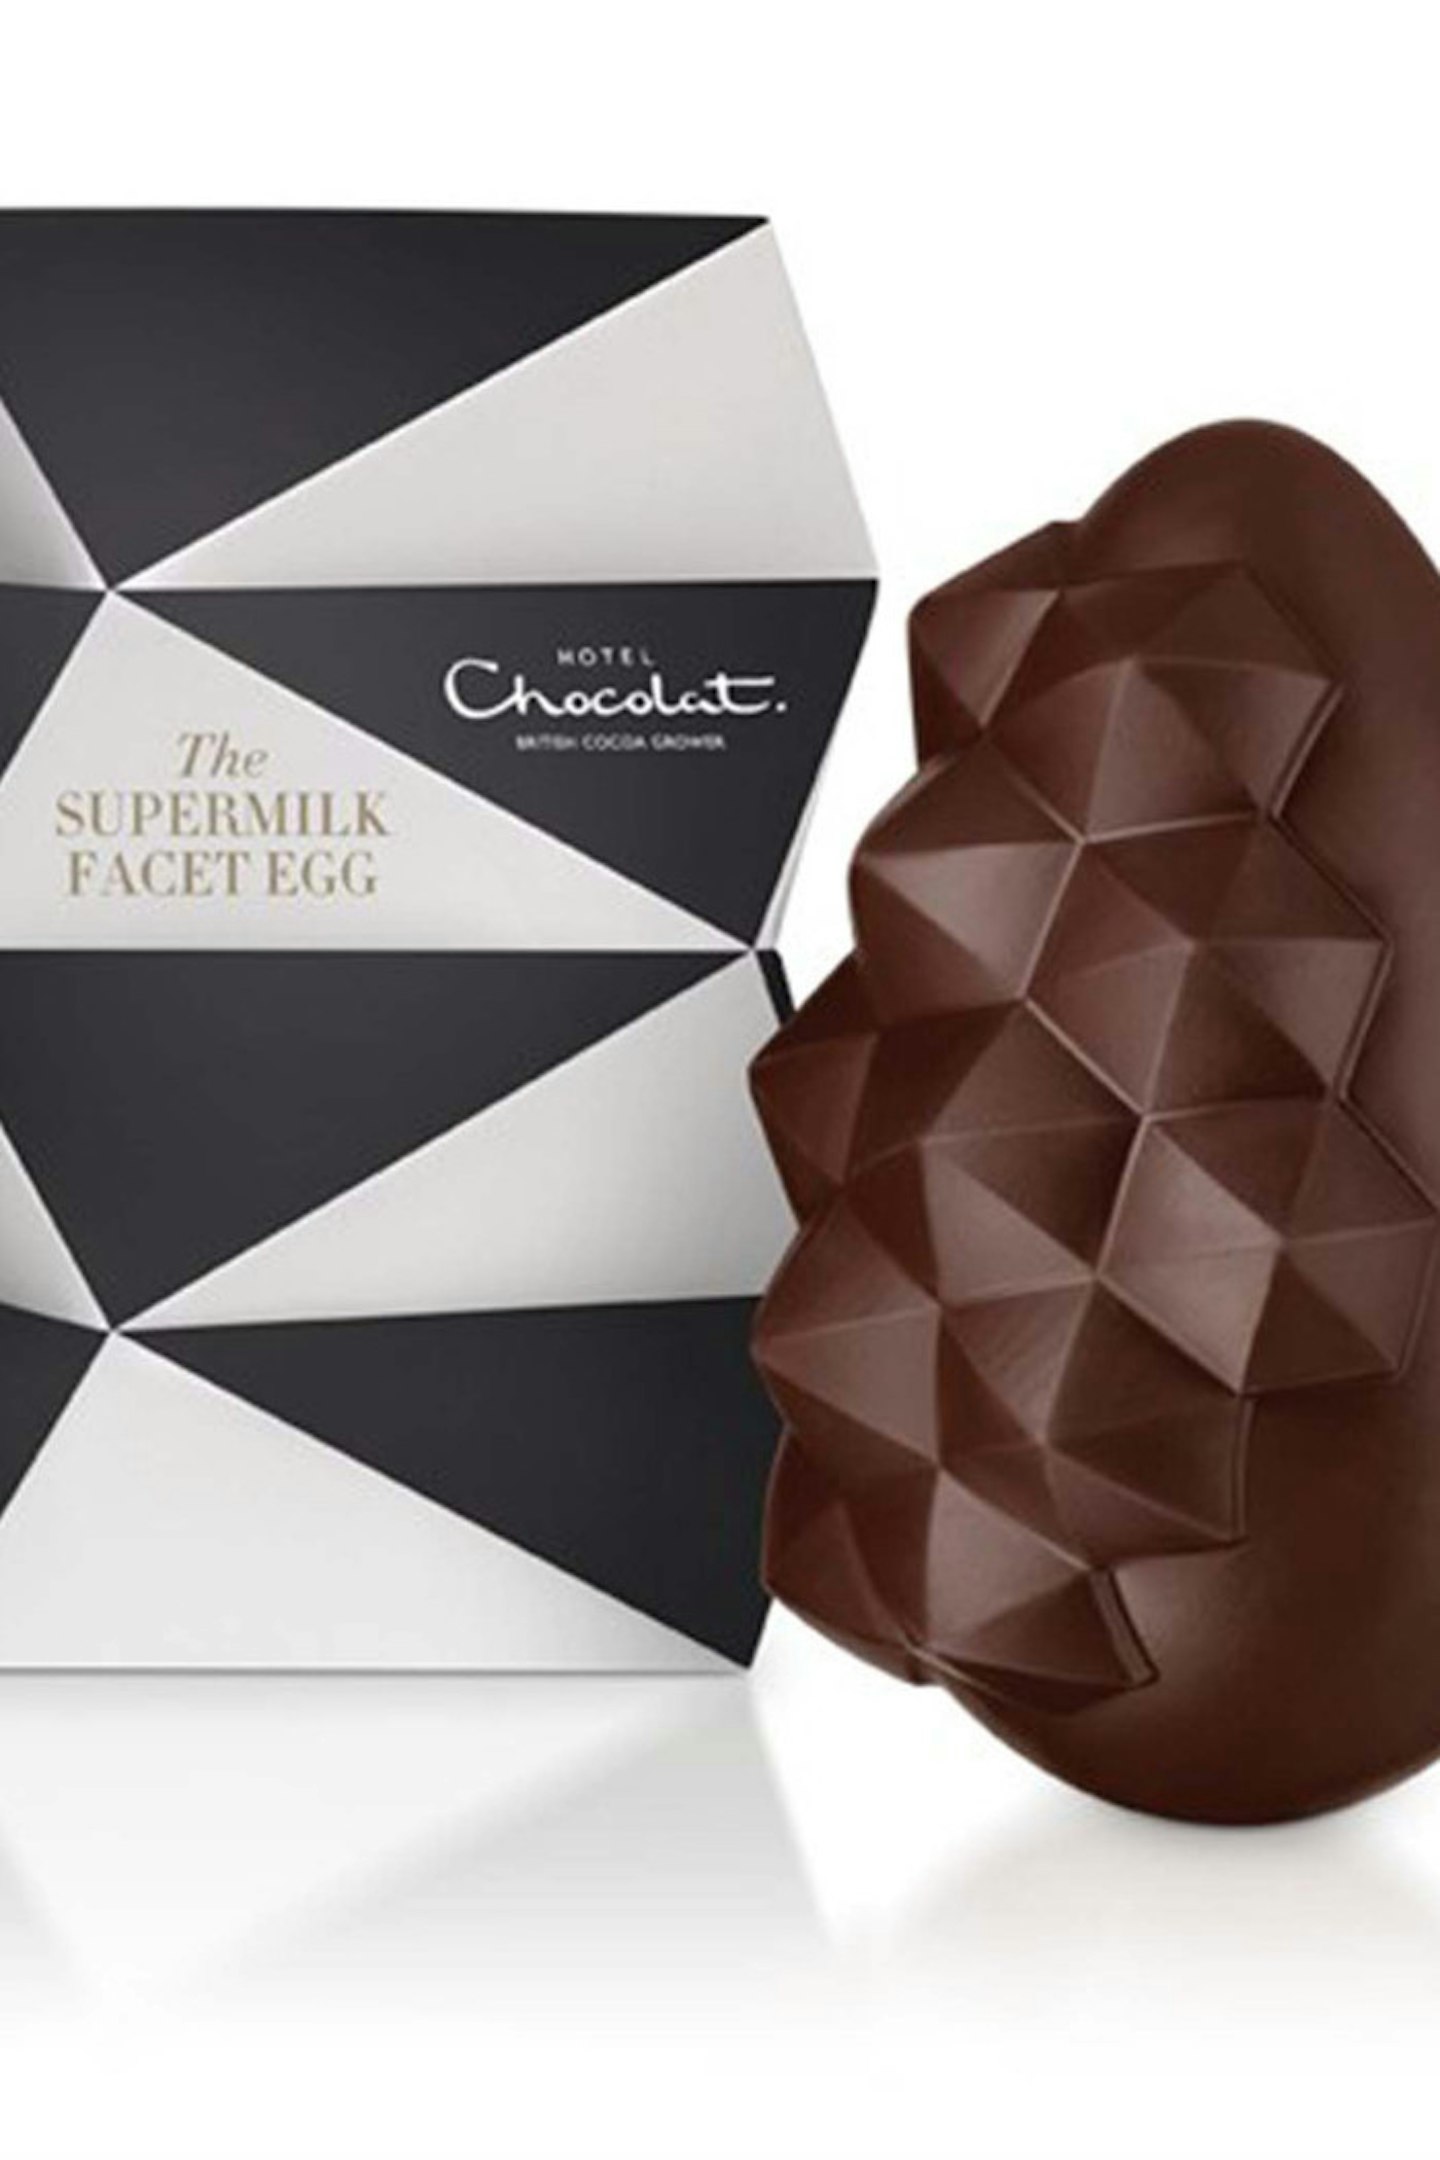 The Supermilk Facet Easter Egg 18.00 hotel choc